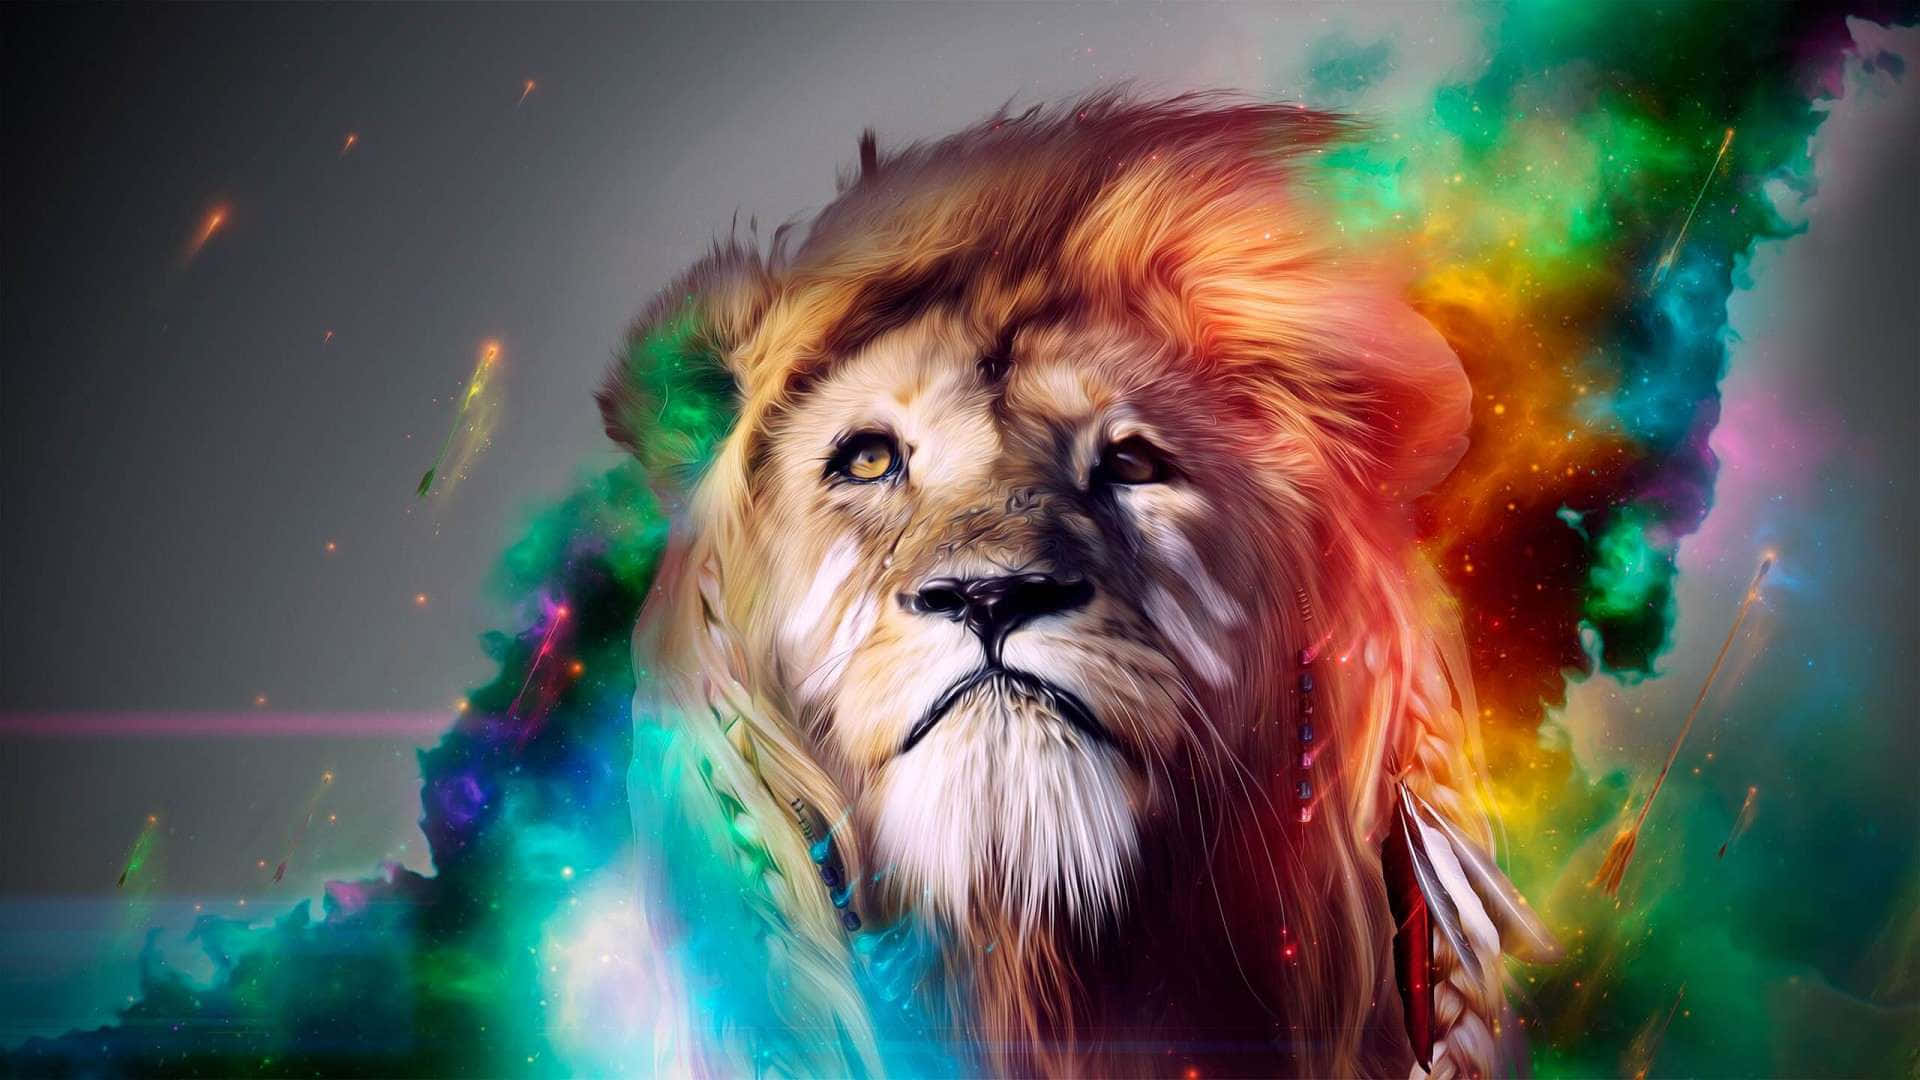 Stunning Galaxy Lion Wallpaper